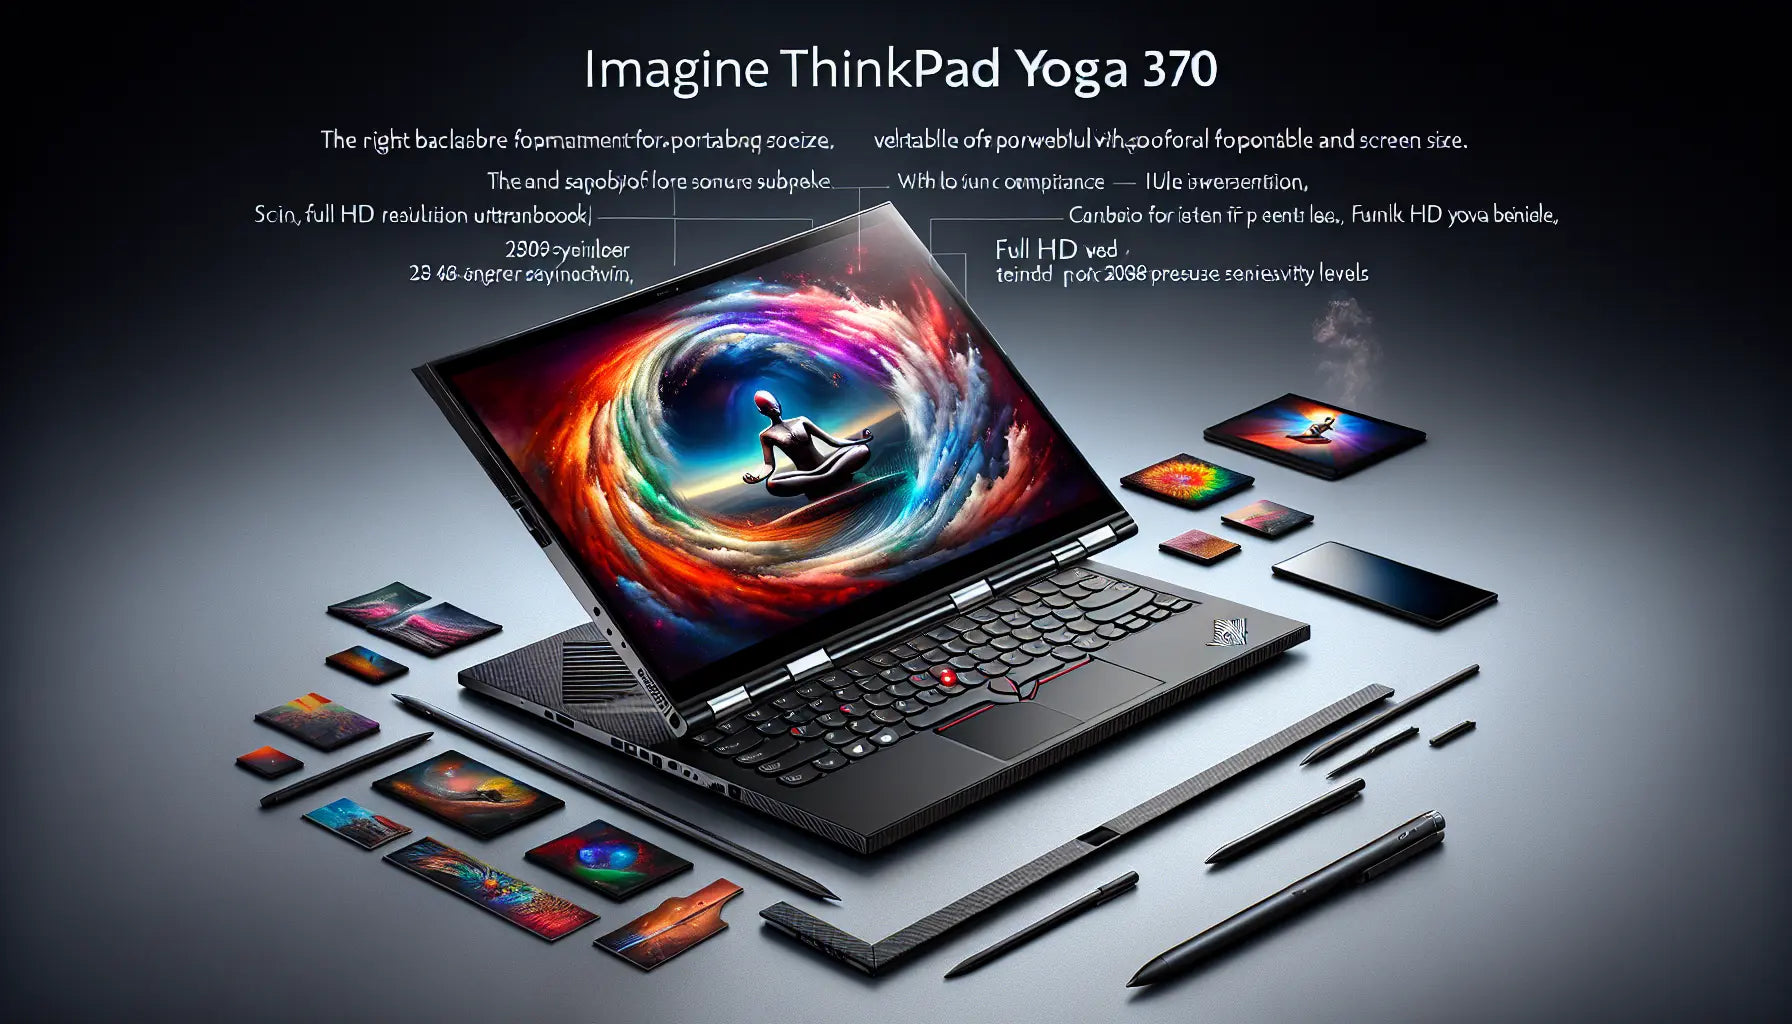 Lenovo ThinkPad X370 I5 , 500GB, 16GB Ram Laptop: A Versatile and Powerful Ultrabook